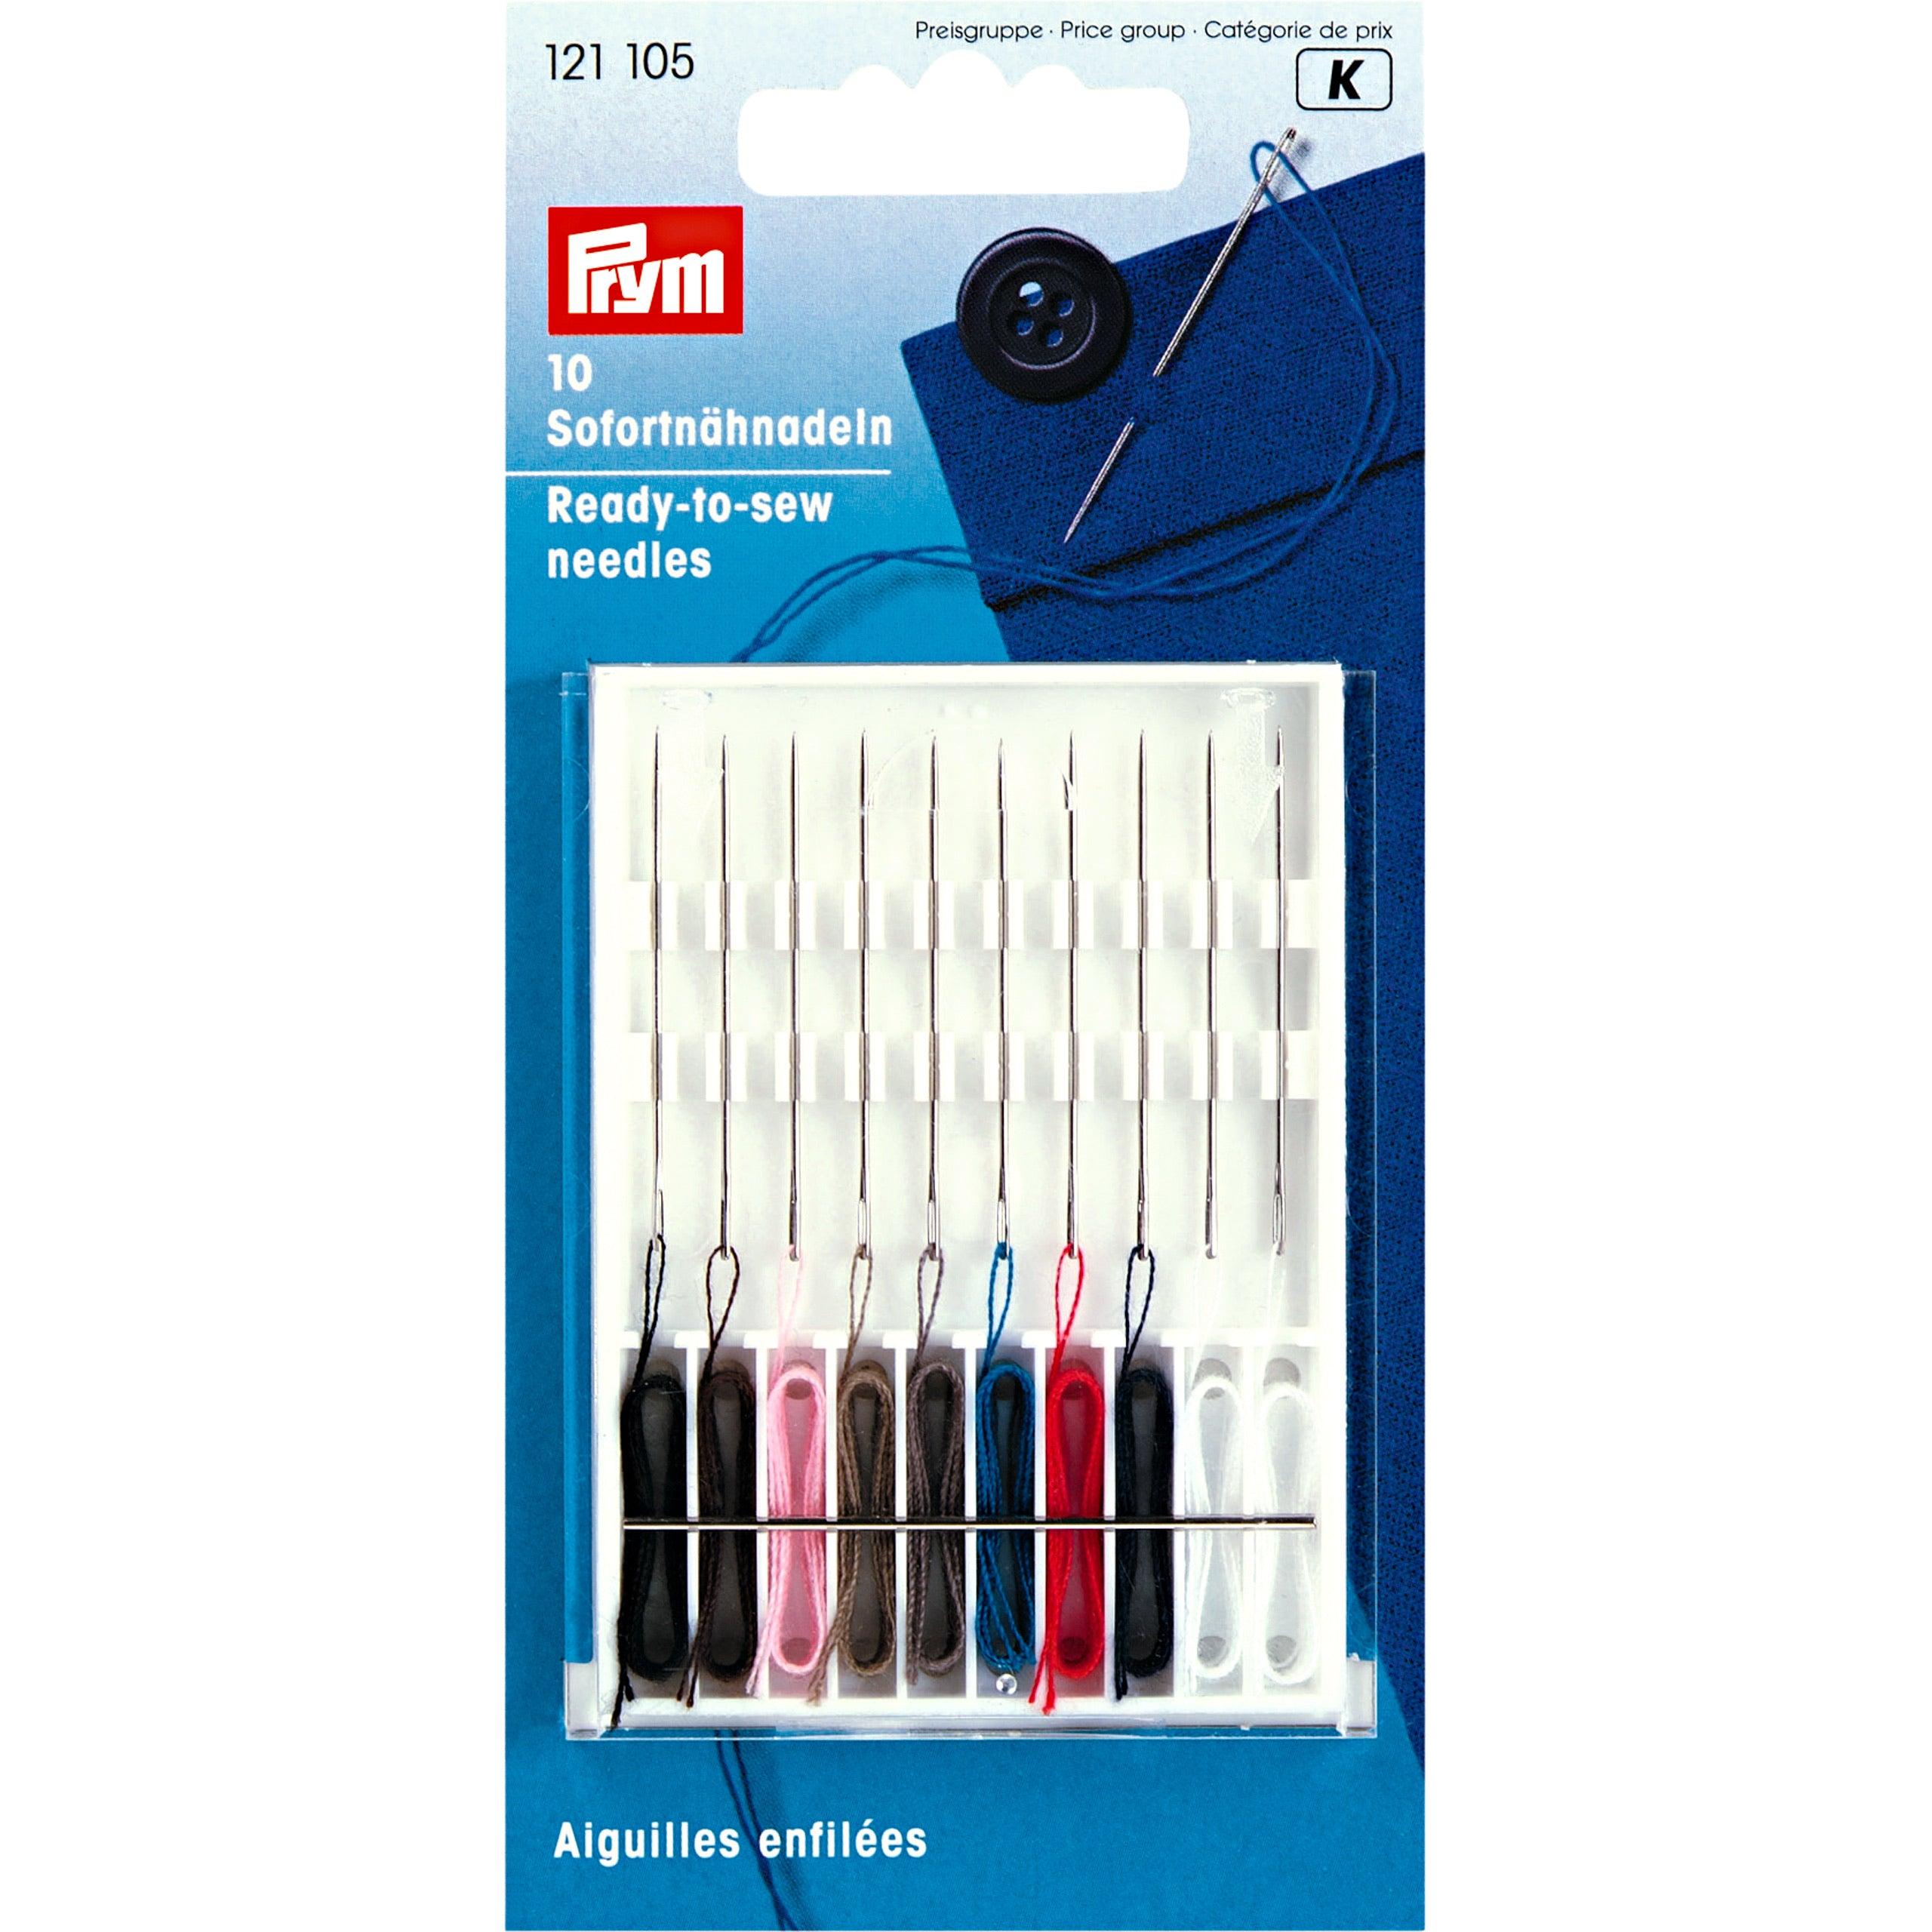 Ready-to-sew needles, 10 items